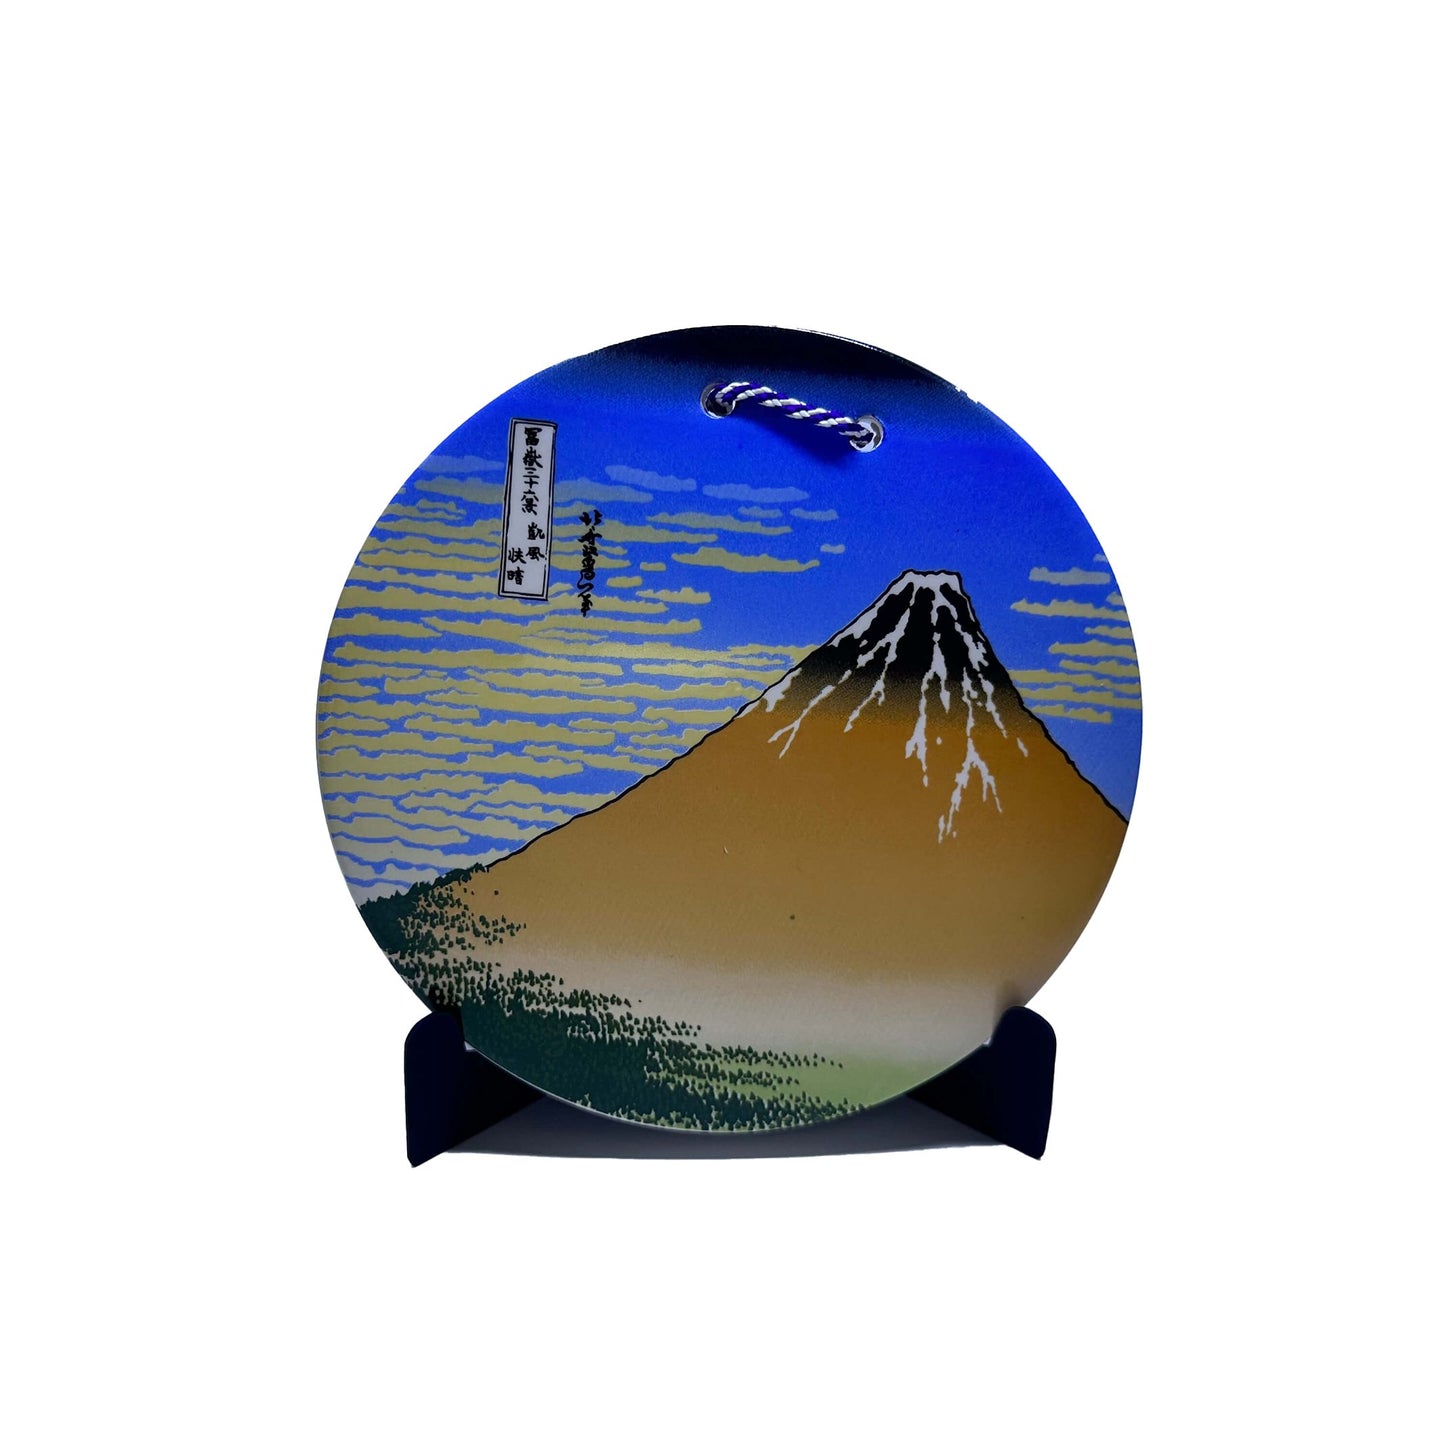 Ukiyo-e Ceramic Plate - "A  Fine Breezy Day" by Katsushika Hokusai